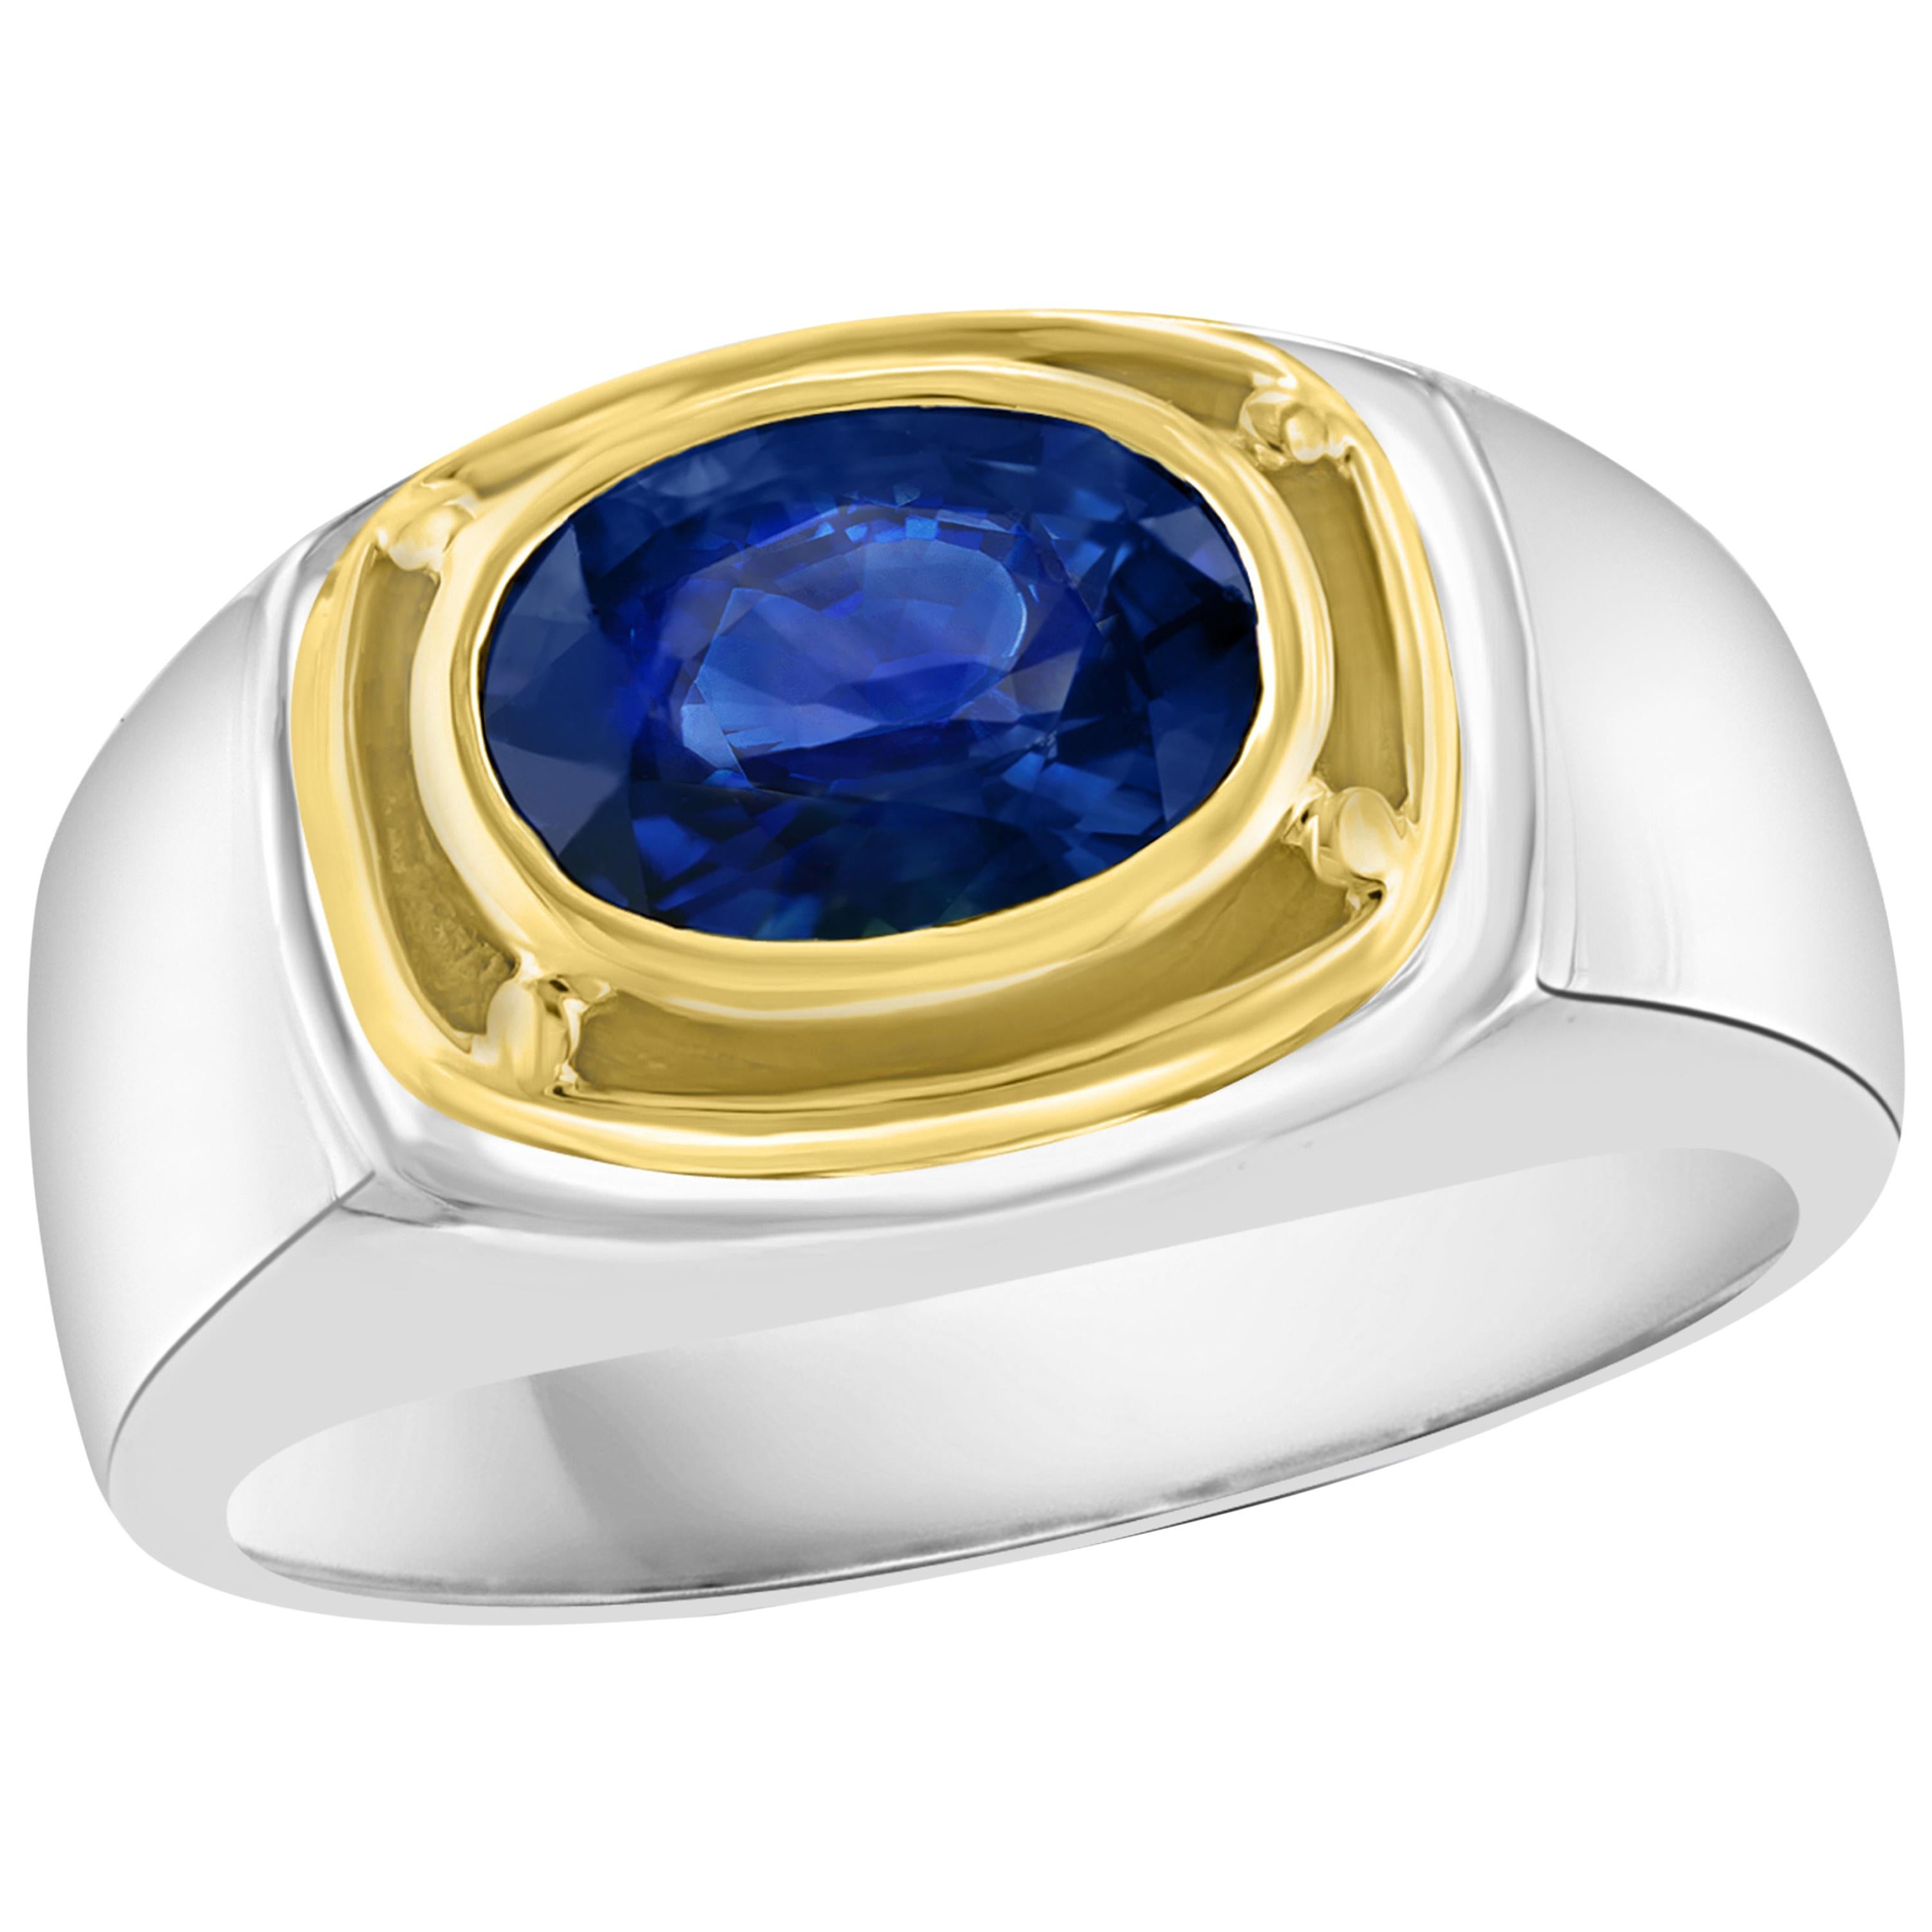 Men's 1 Ct. Sapphire and Diamond Ring